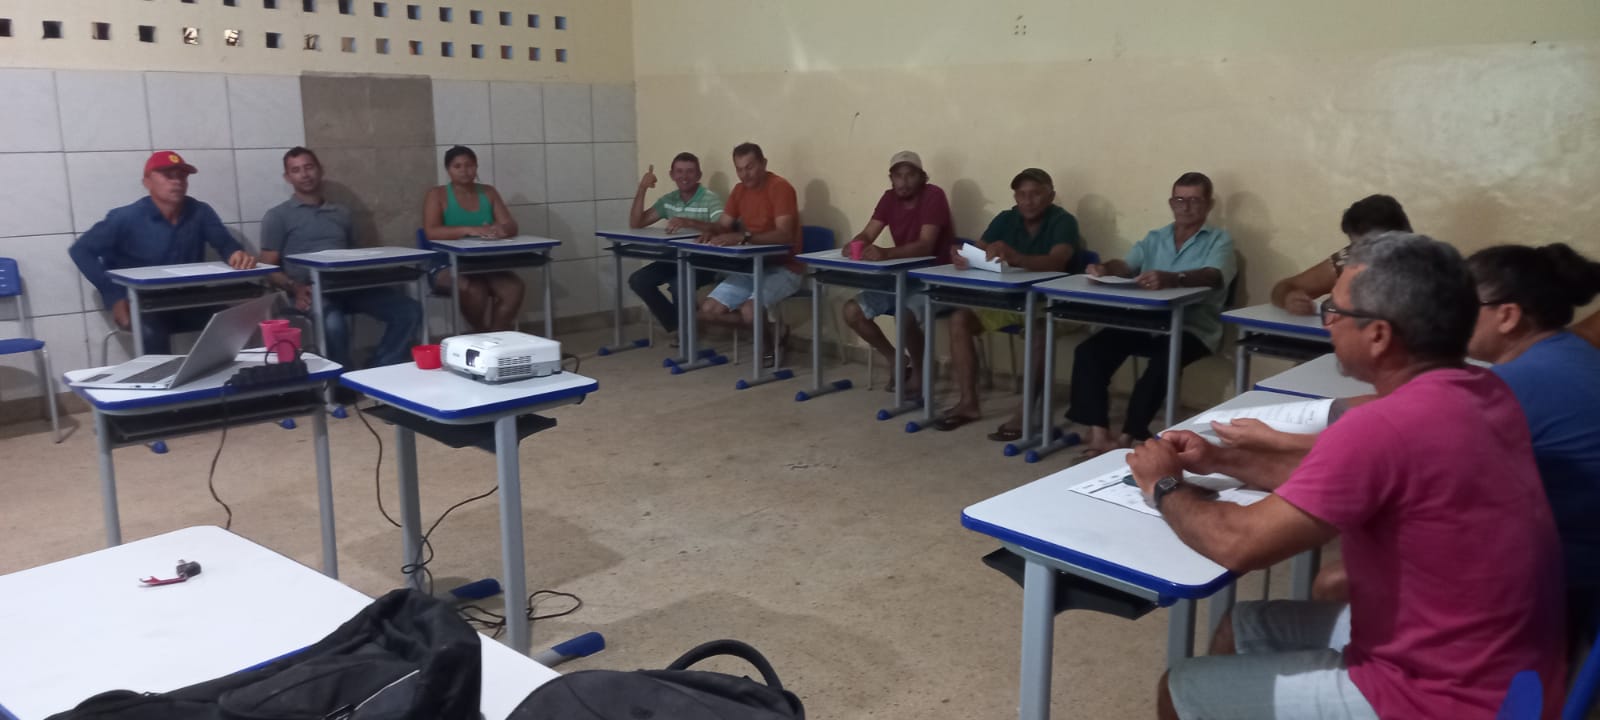 Prefeitura Municipal continua com cronograma de consultoria em cajucultura na zona rural